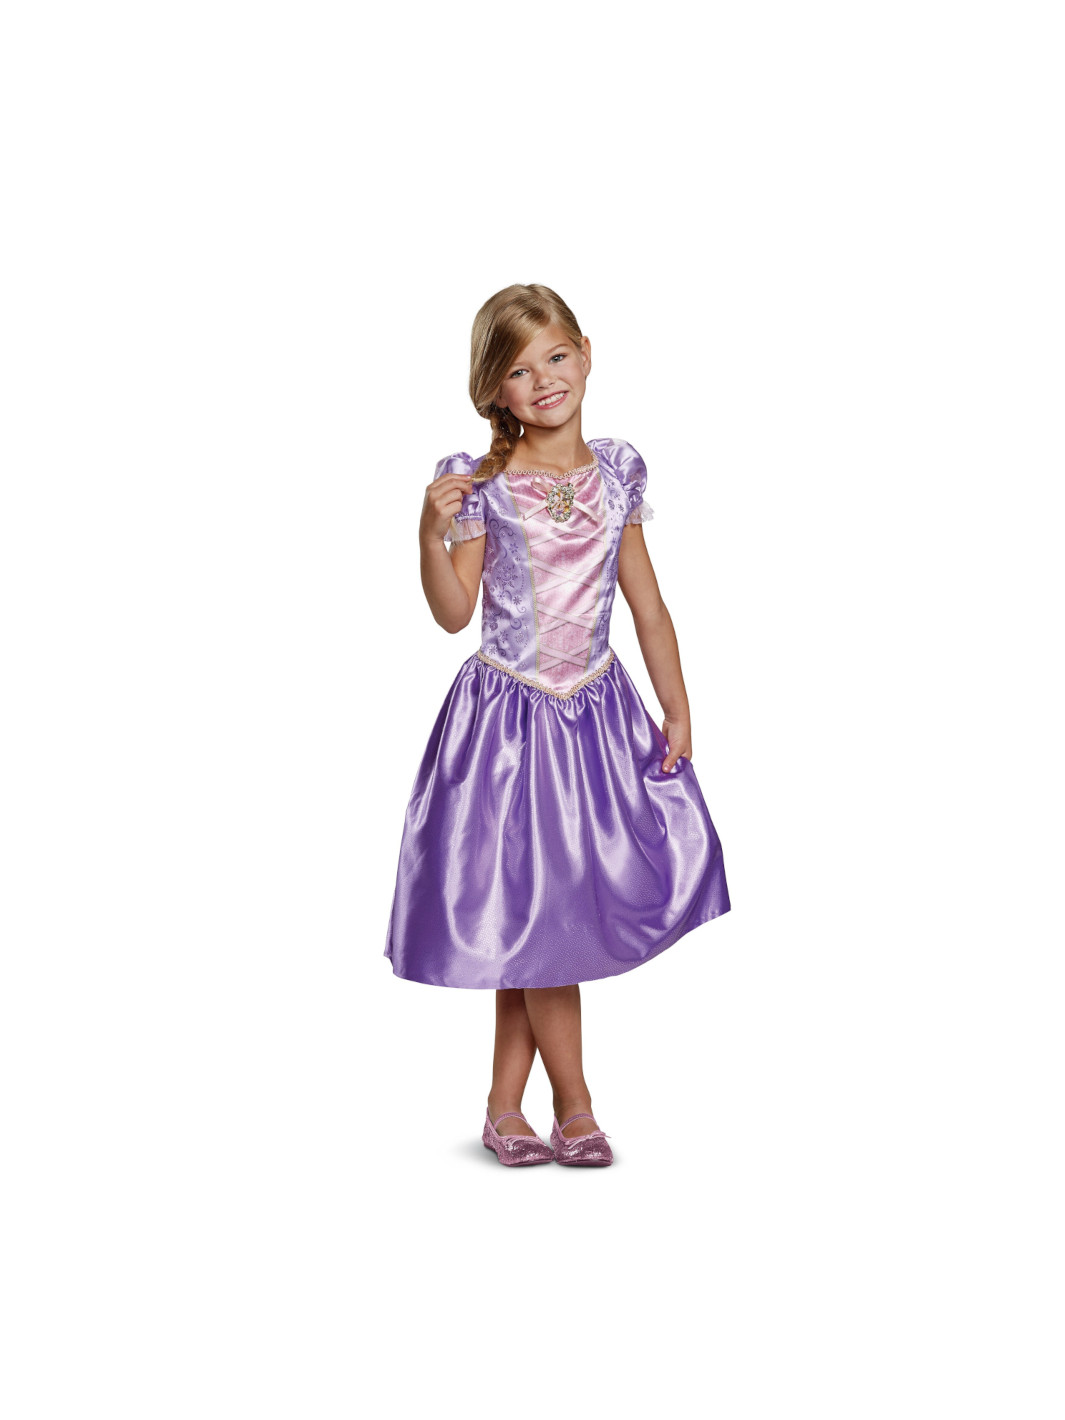 Disney princess dress up, costume di rapunzel classic - DISNEY PRINCESS